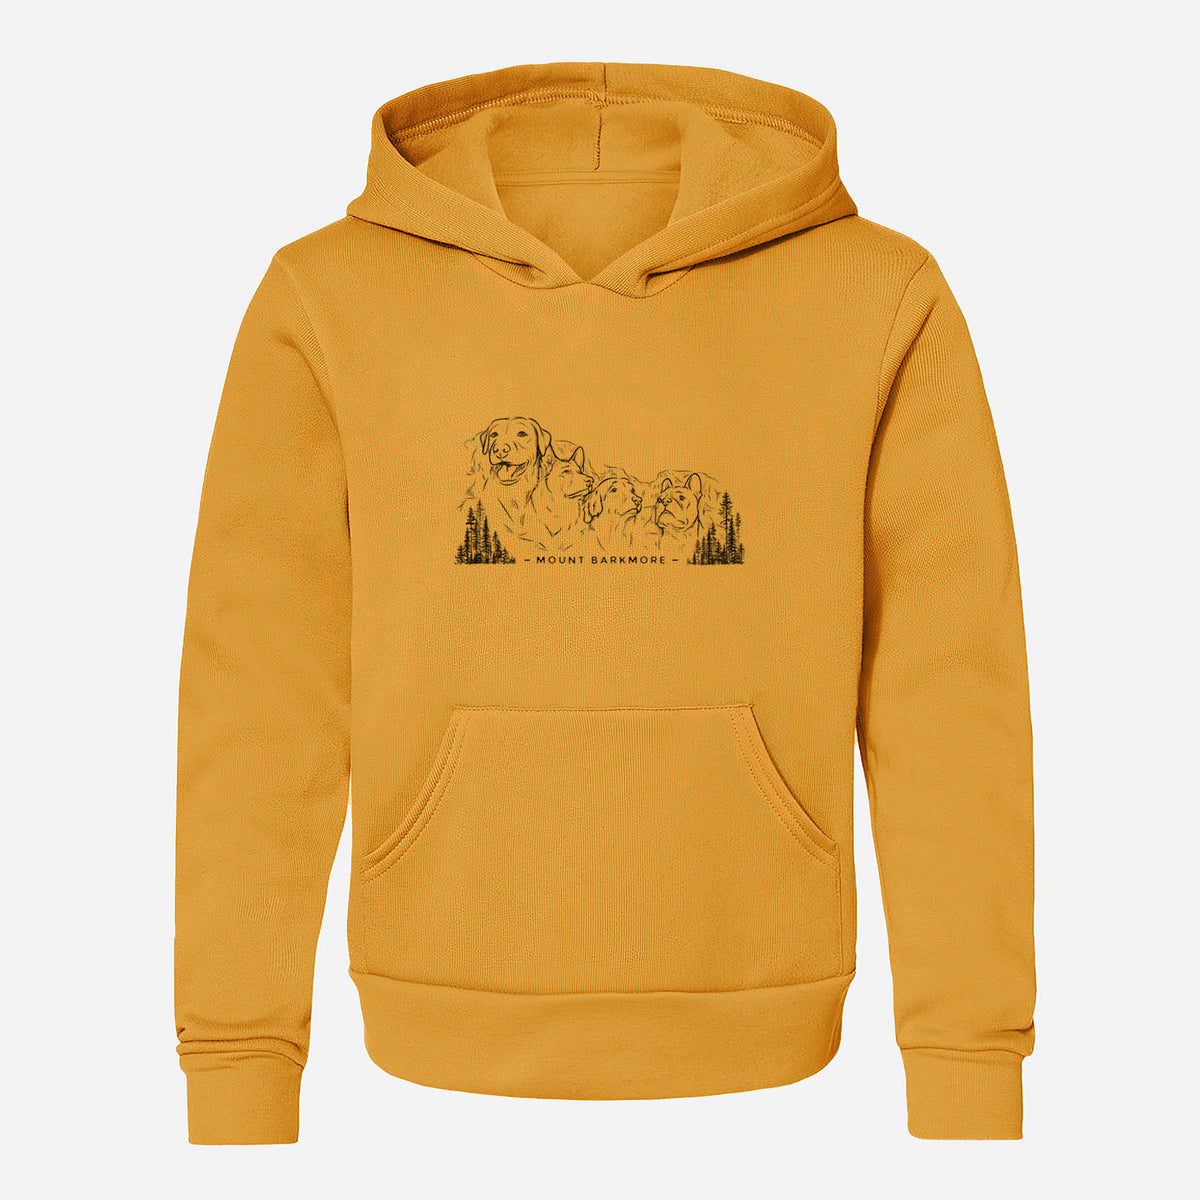 Mount Barkmore - Dog Tribute - Youth Hoodie Sweatshirt